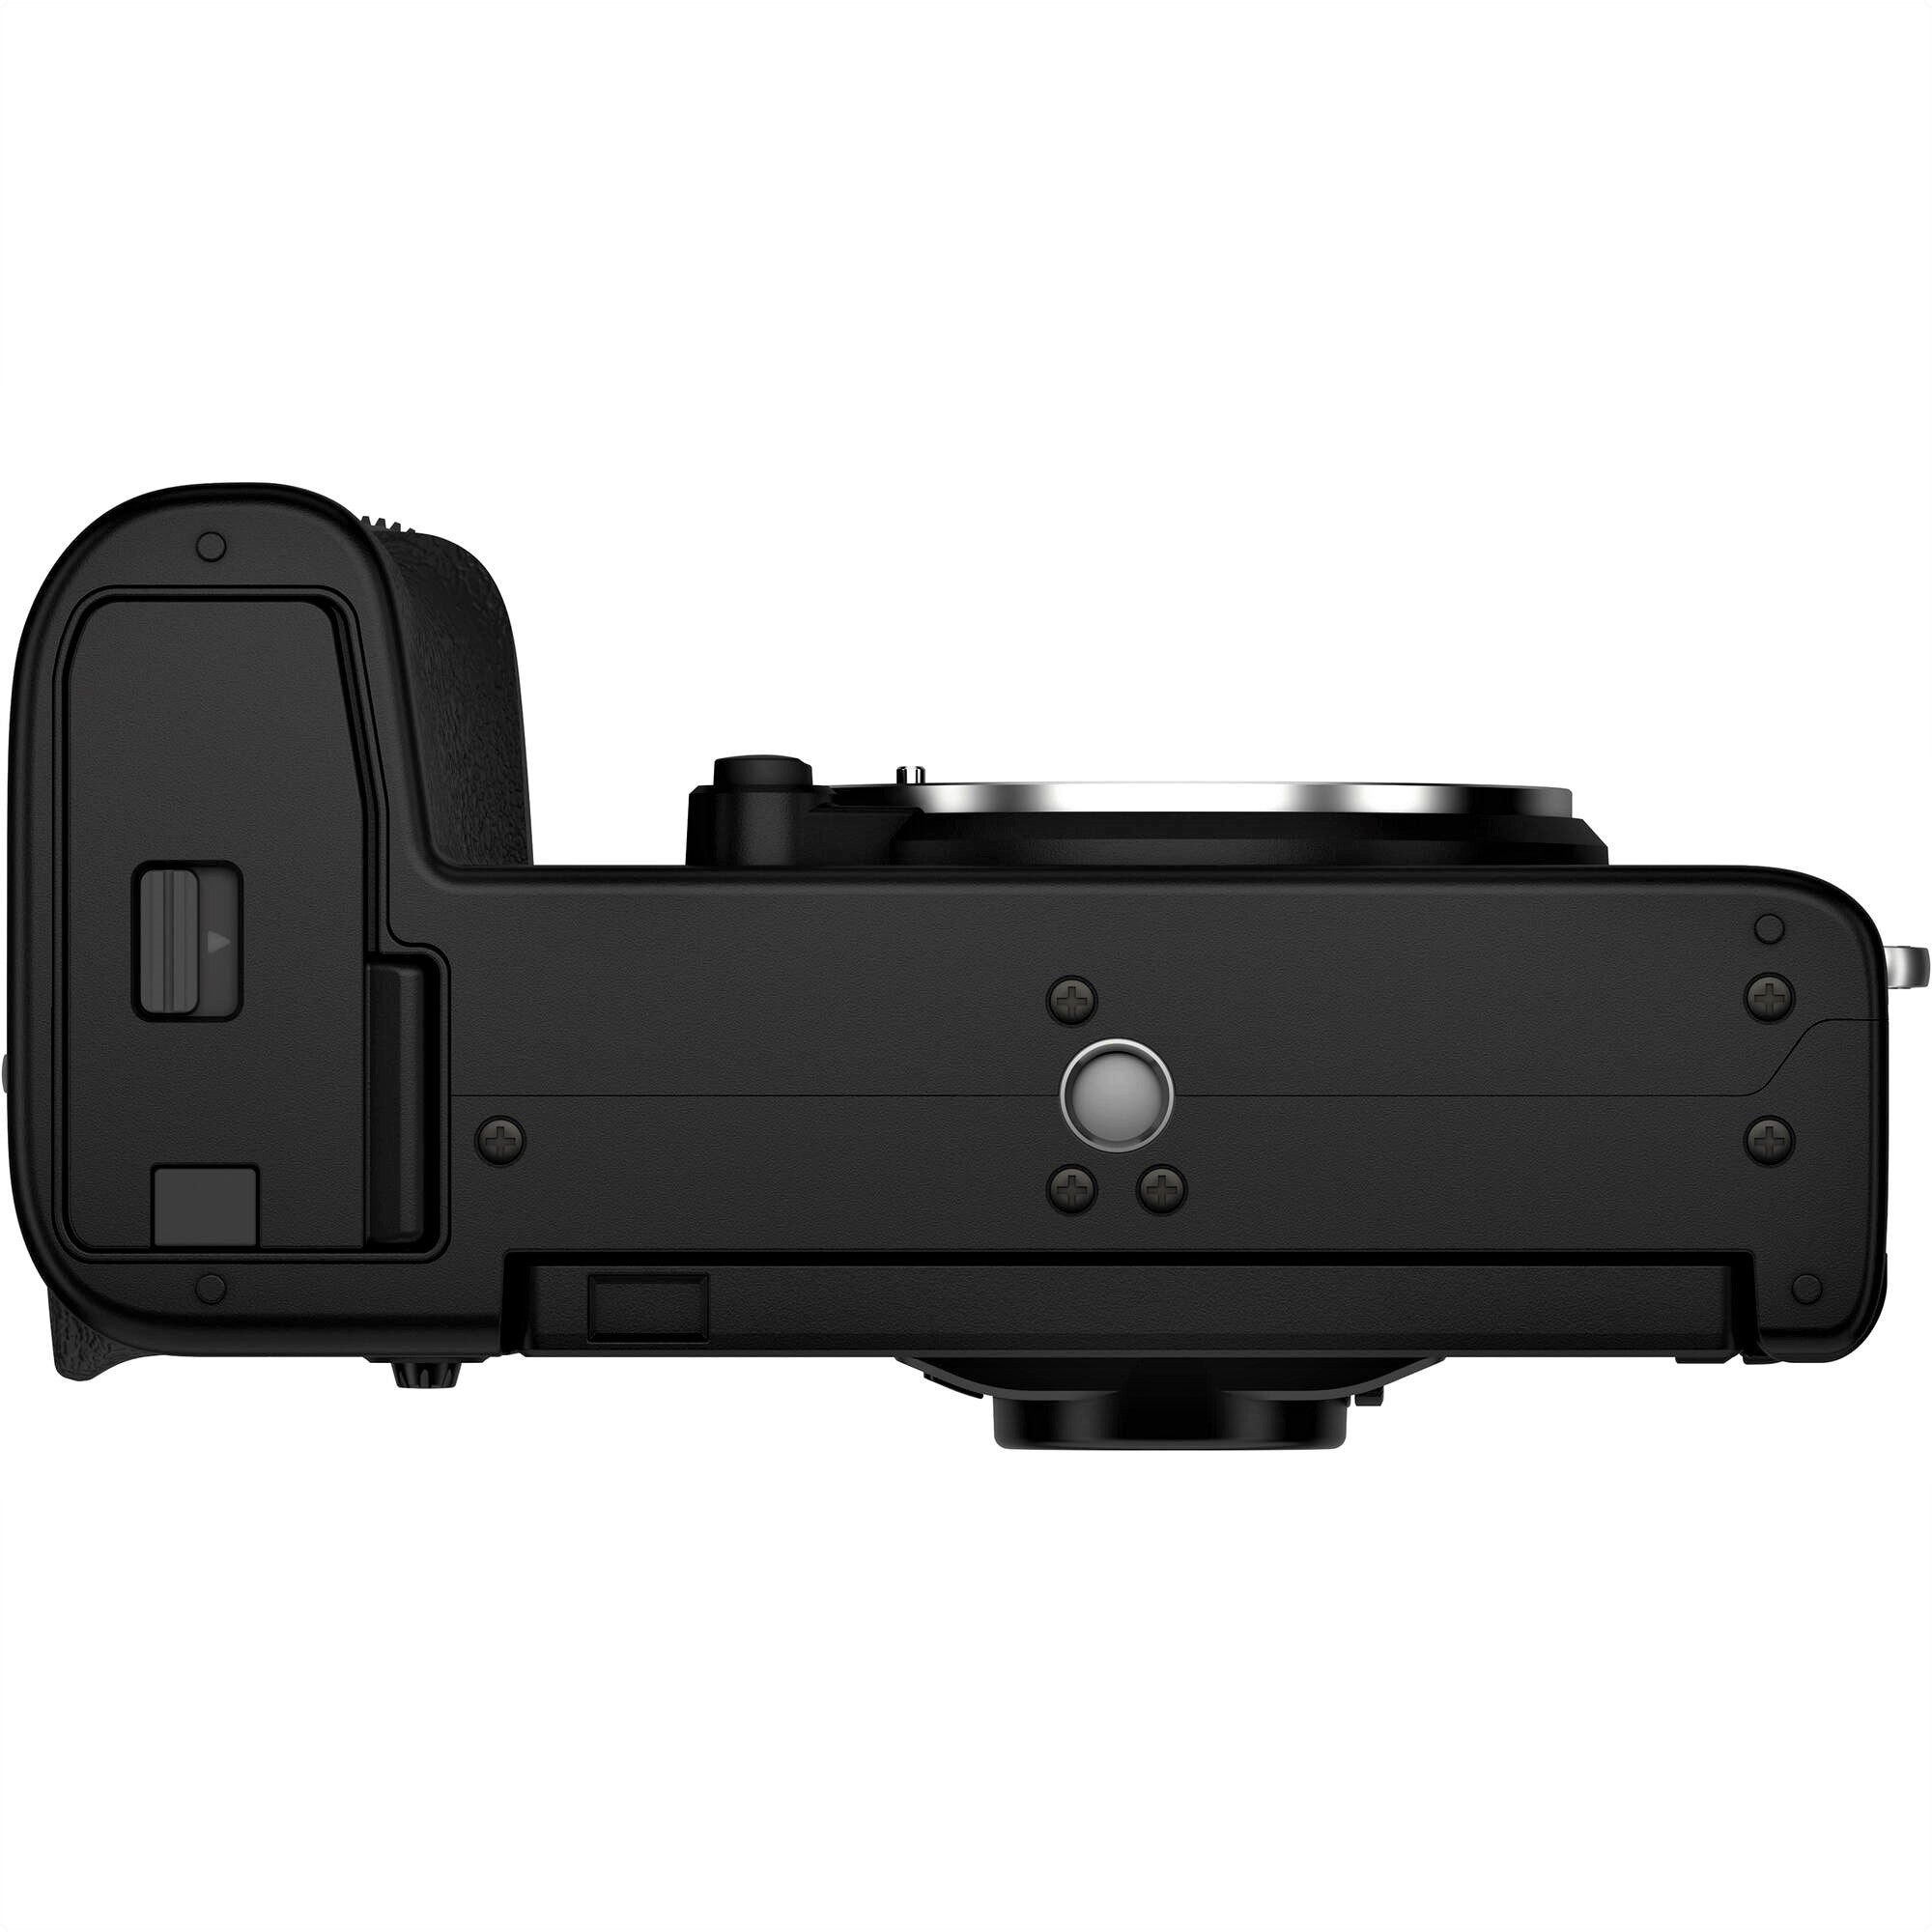 Fujifilm X-S10 Mirrorless Camera with 18-55mm Lens - Bottom View